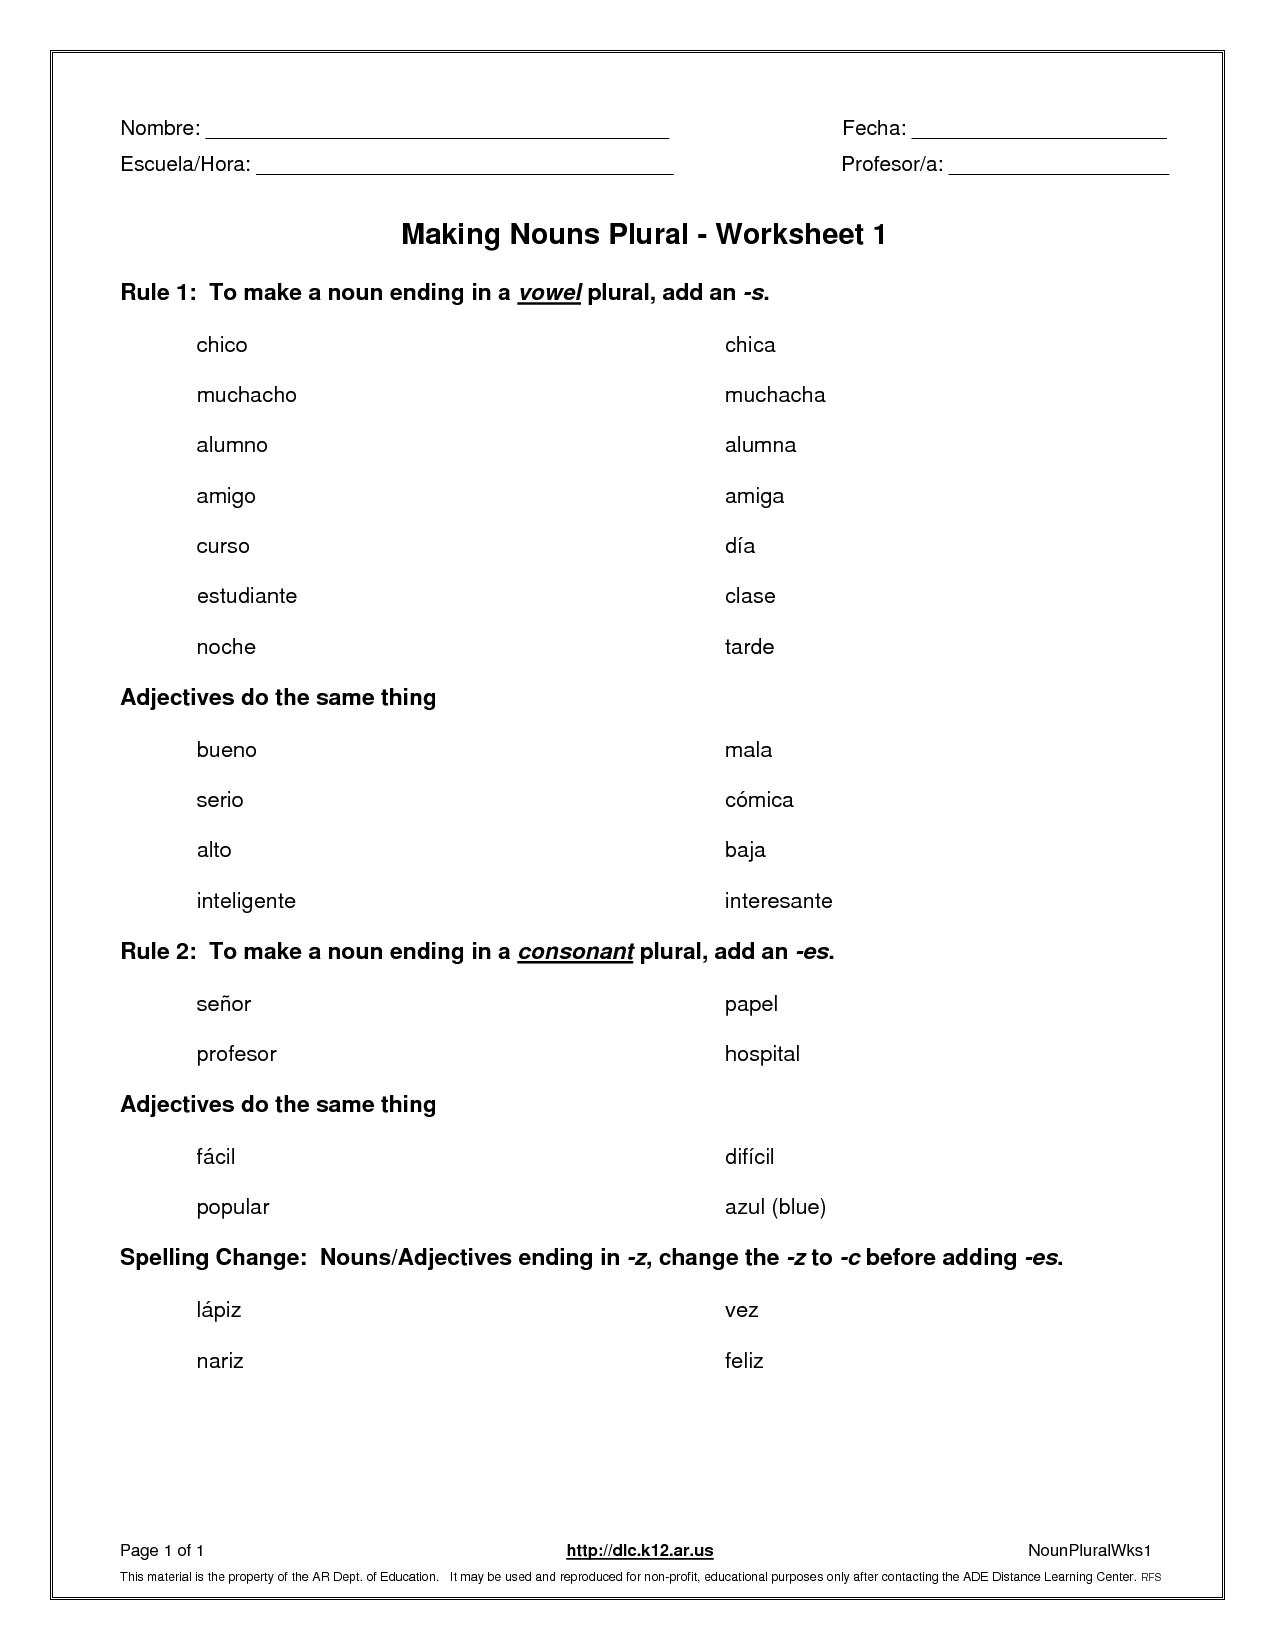 Singular and Plural Possessives Worksheet Image